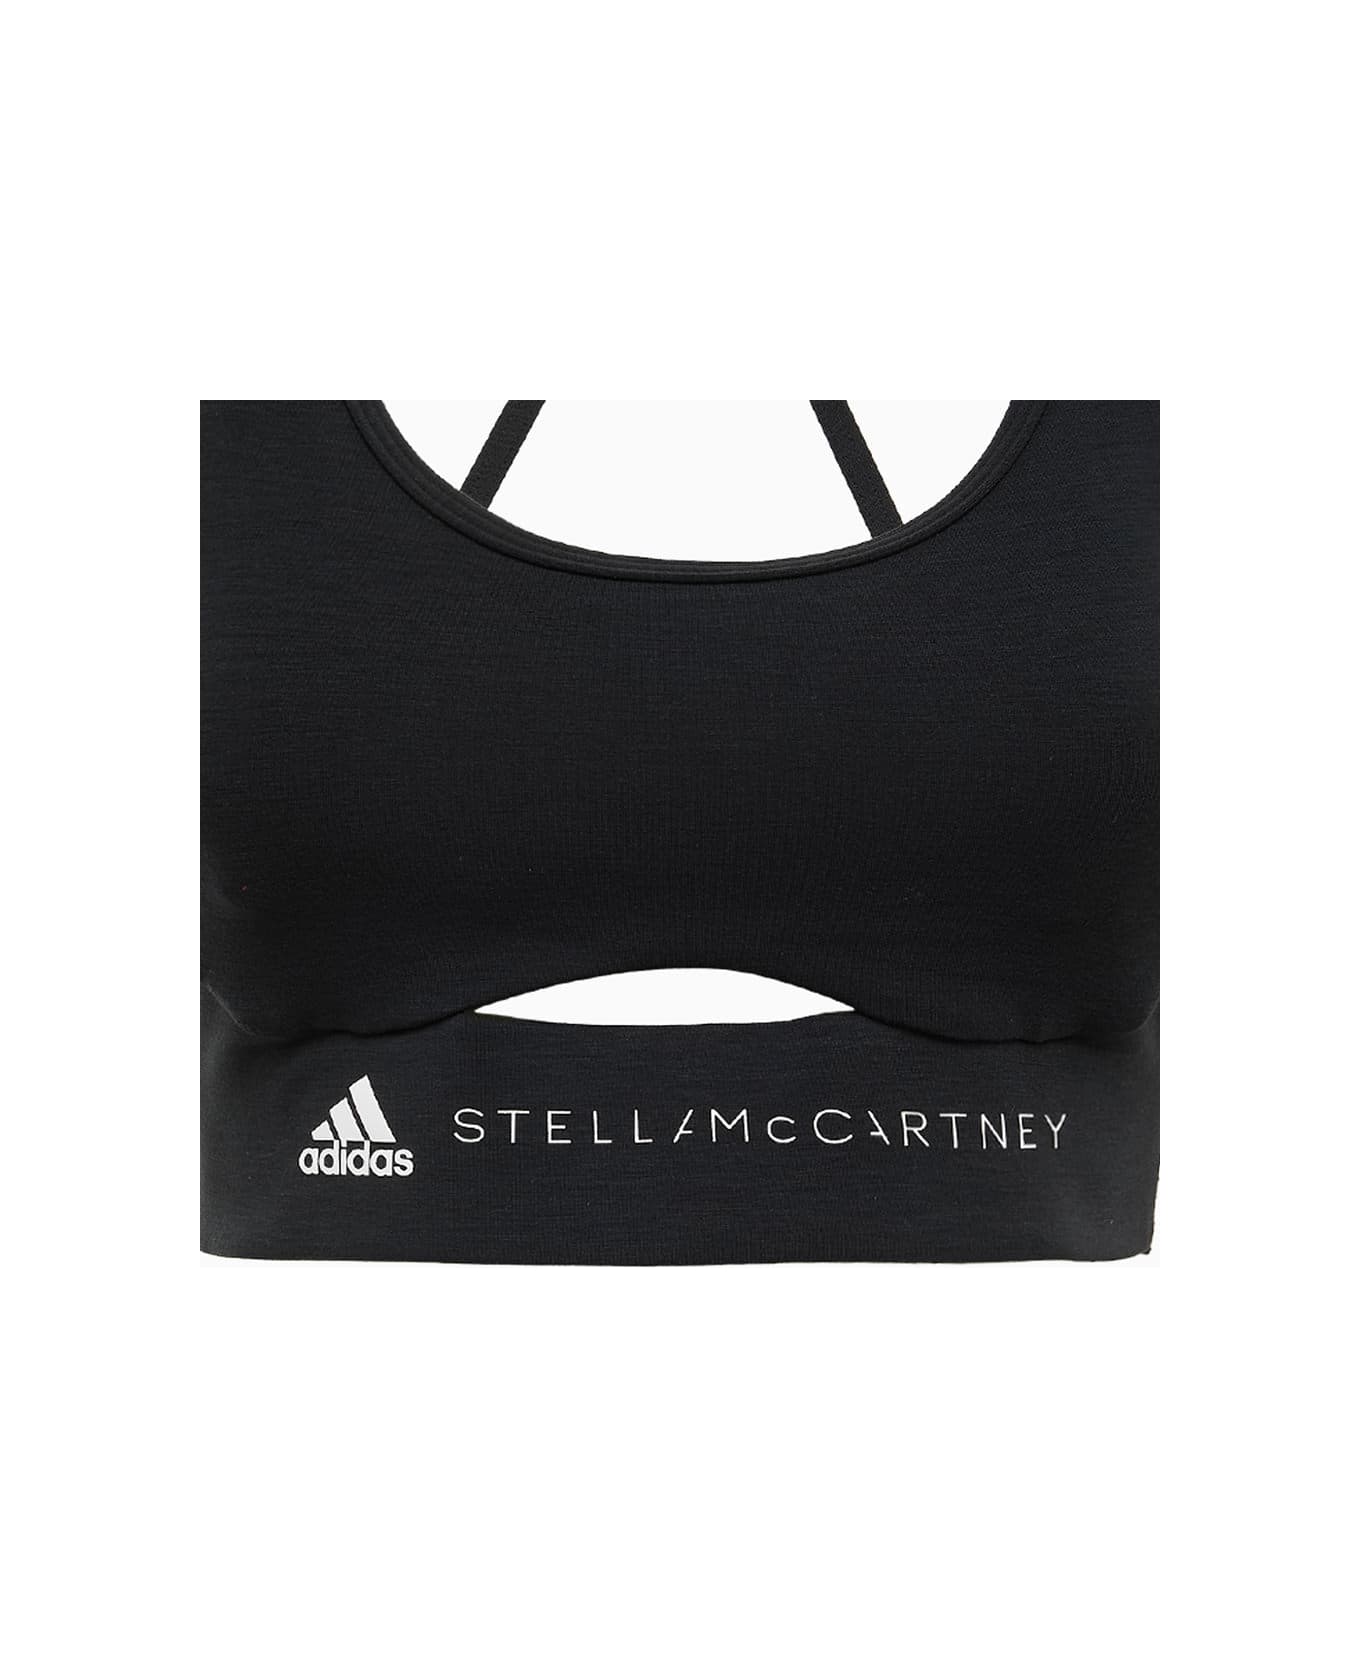 Adidas by Stella McCartney Top Hr2192 - Black White トップス